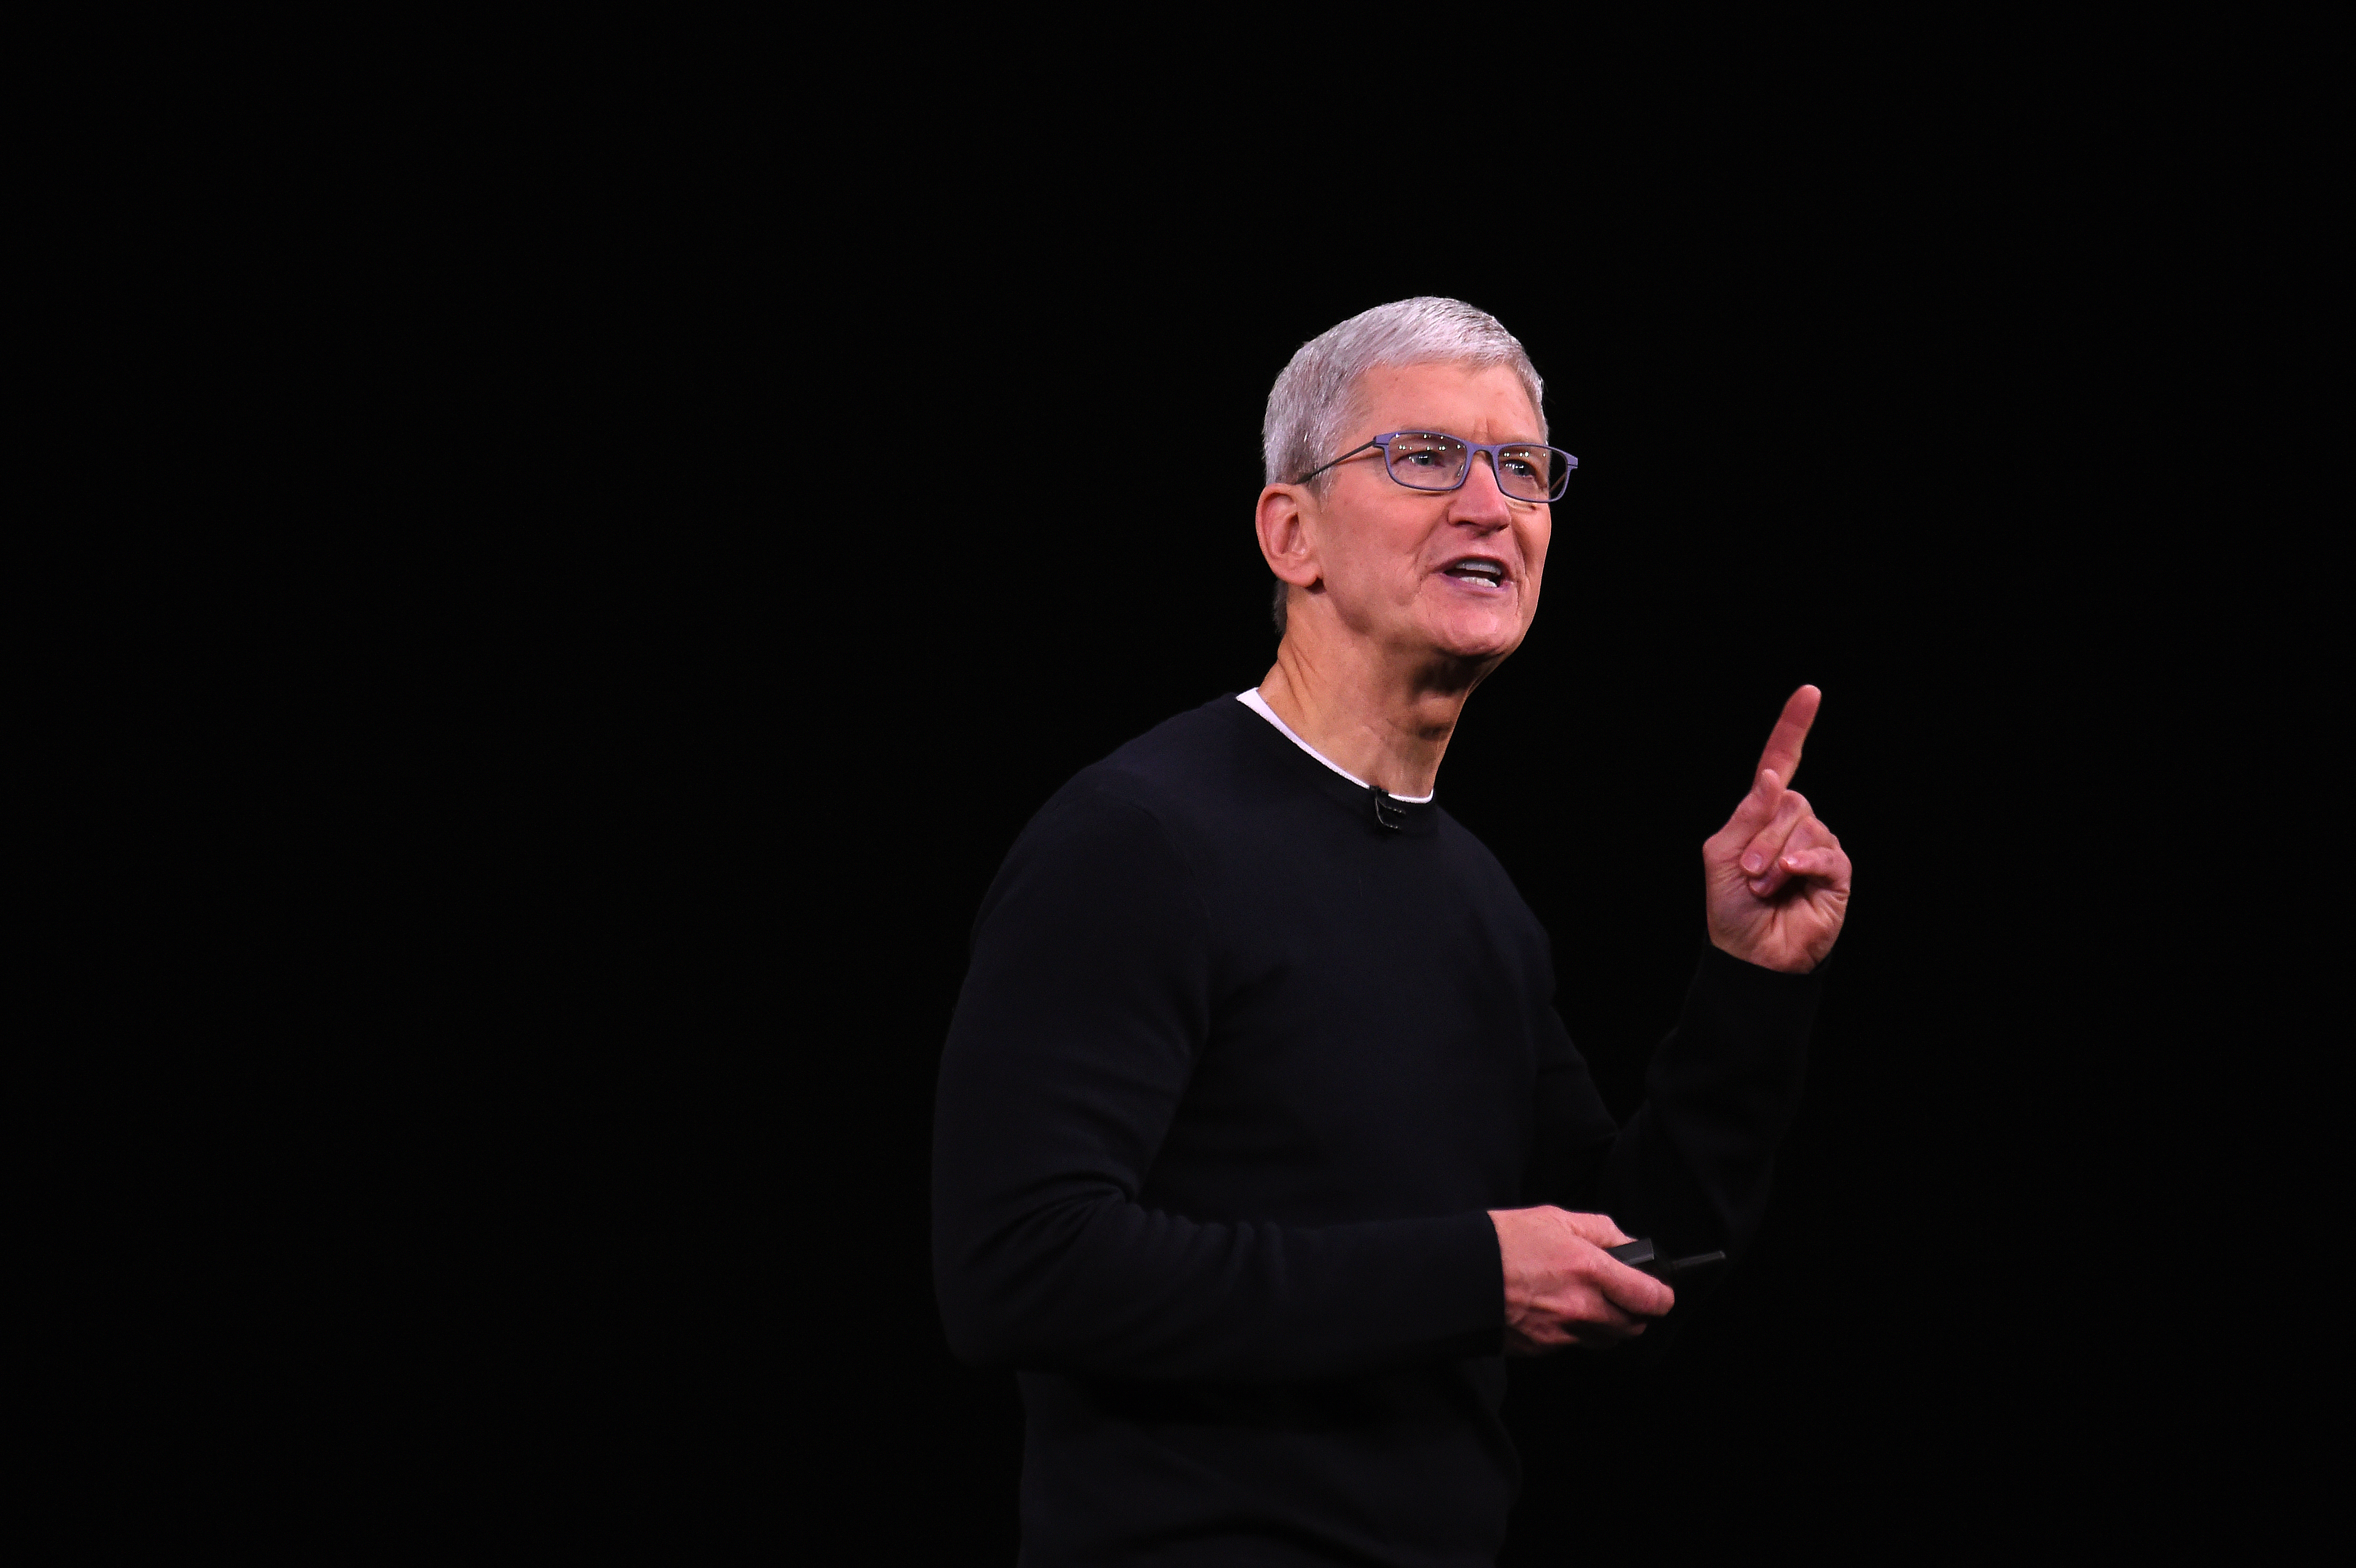 Tim Cook CEO Apple iPhone 11 event Apple Arcade Netflix-killer